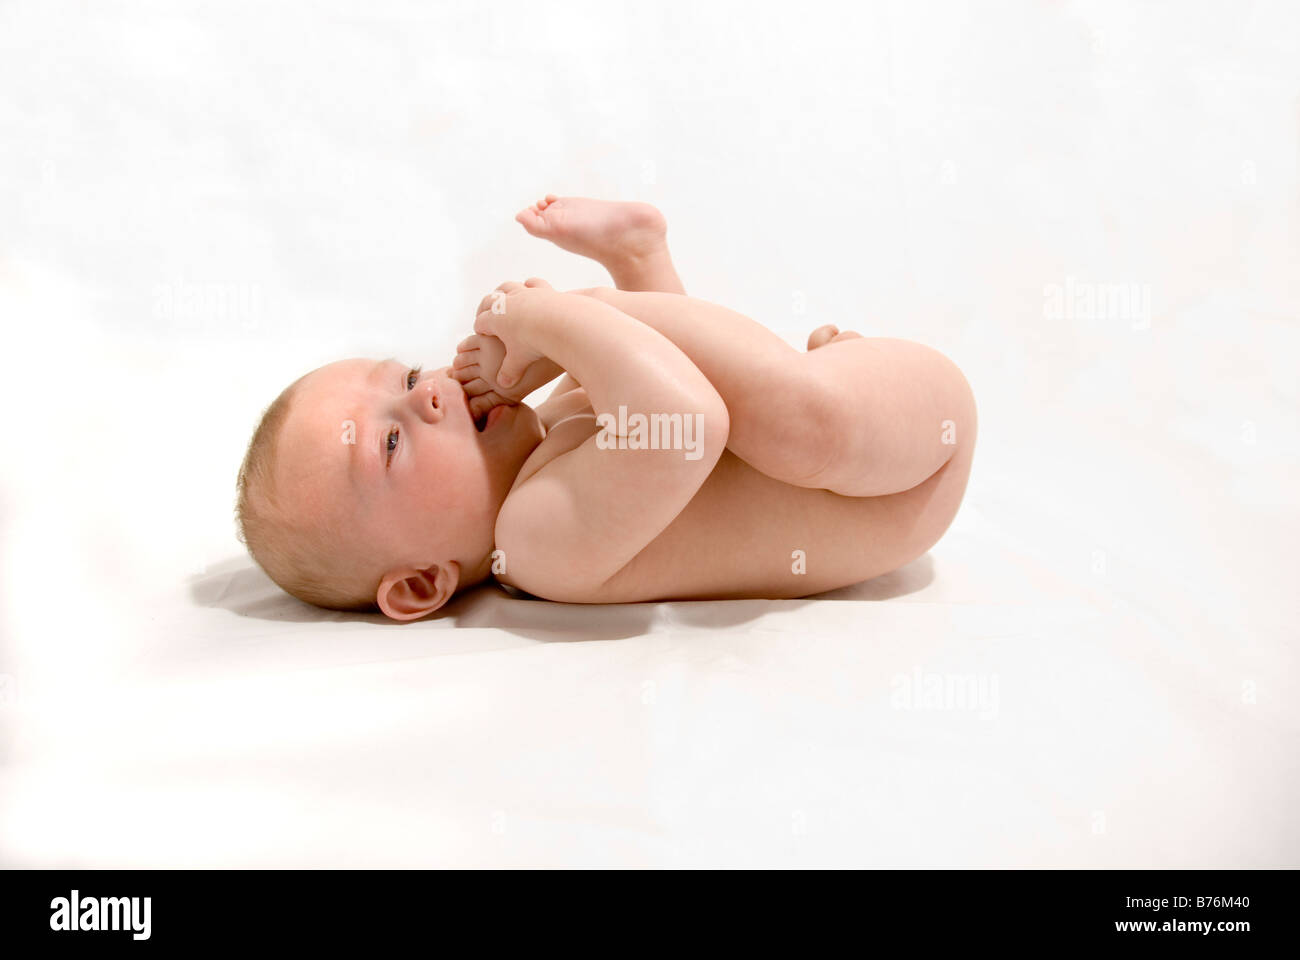 Nude lie baby photos -